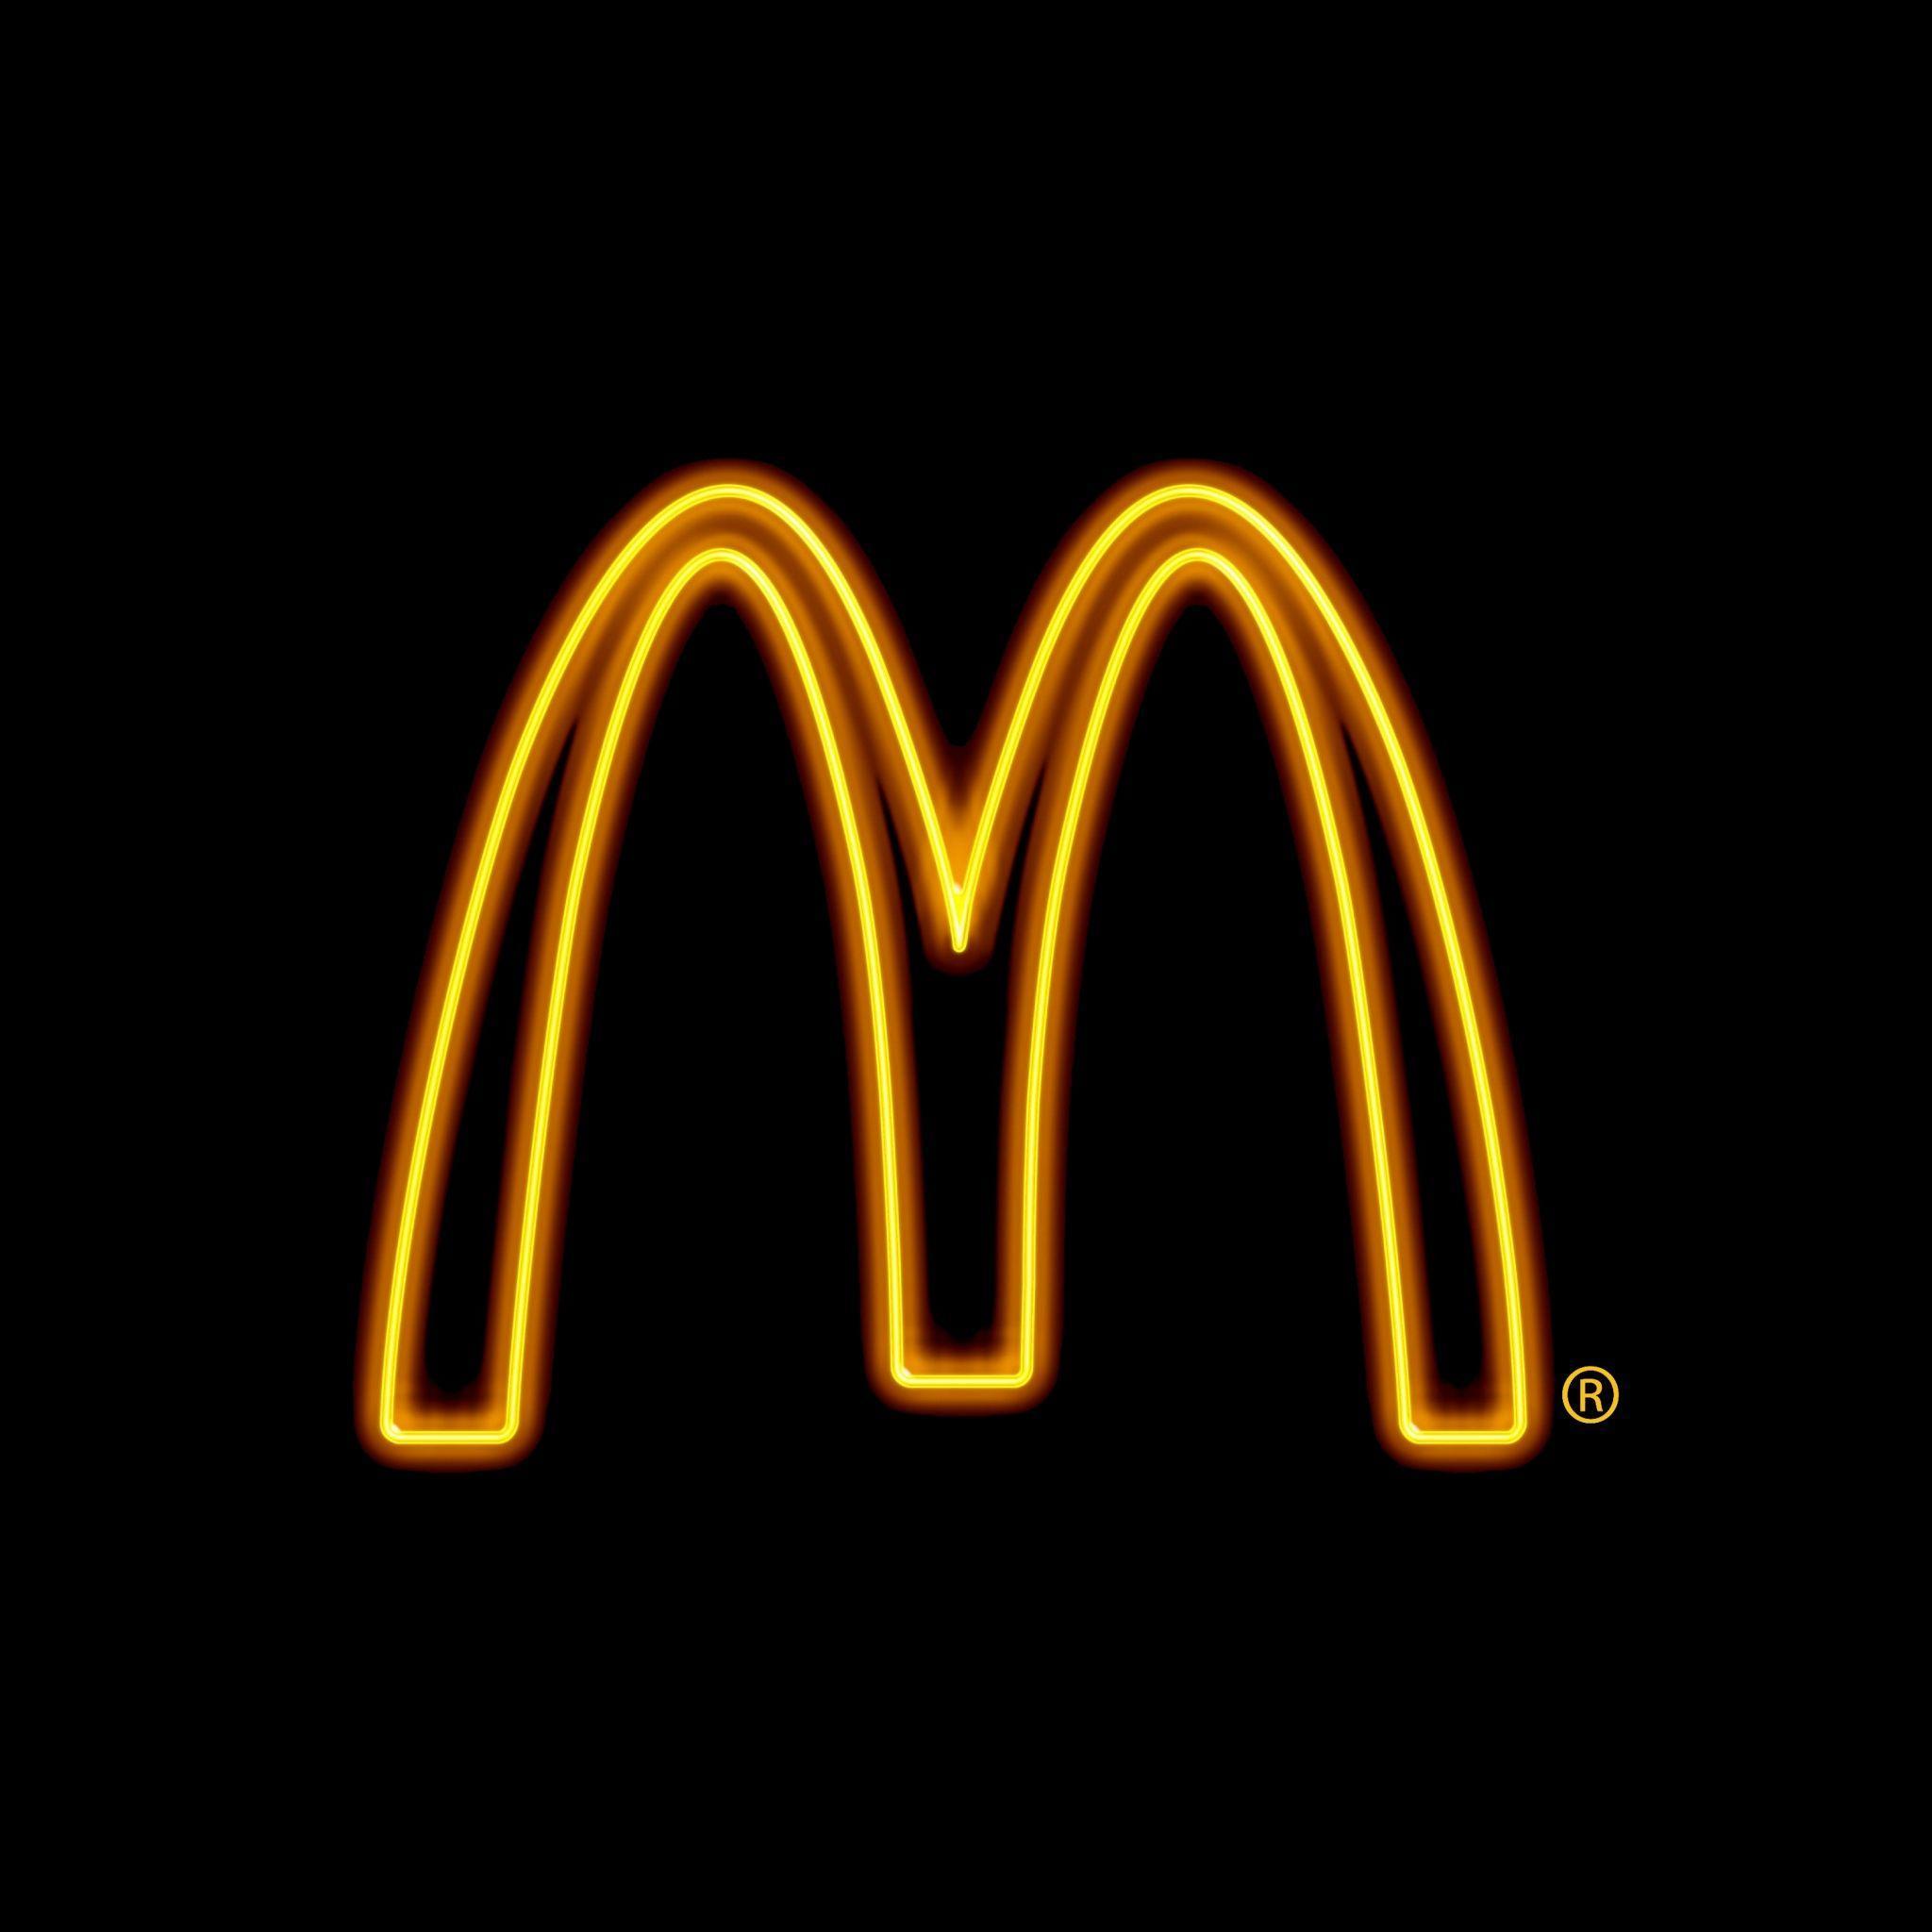 McDonalds Hd Wallpaper 4k For Pc, McDonalds, Other